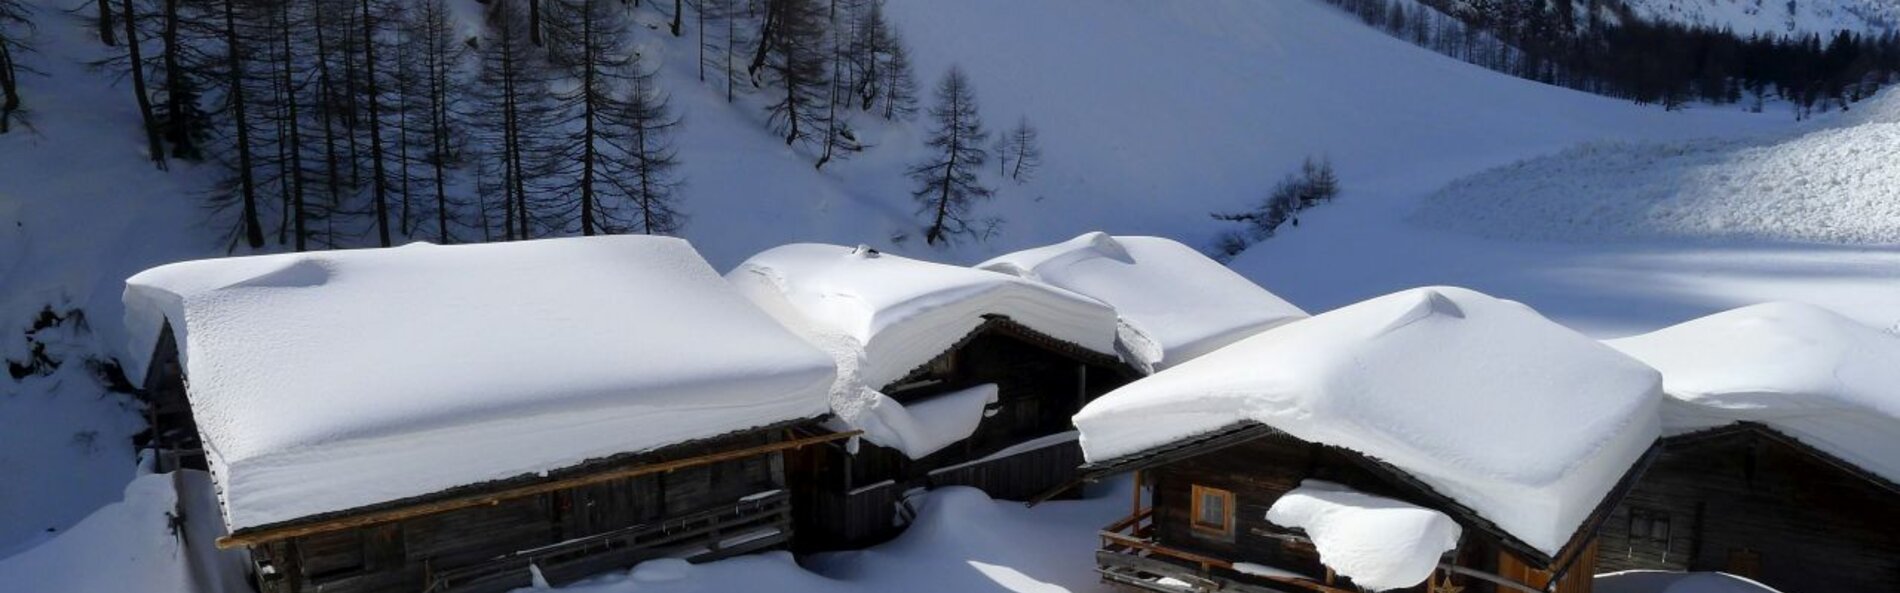 snowy mountain huts © Land Tirol